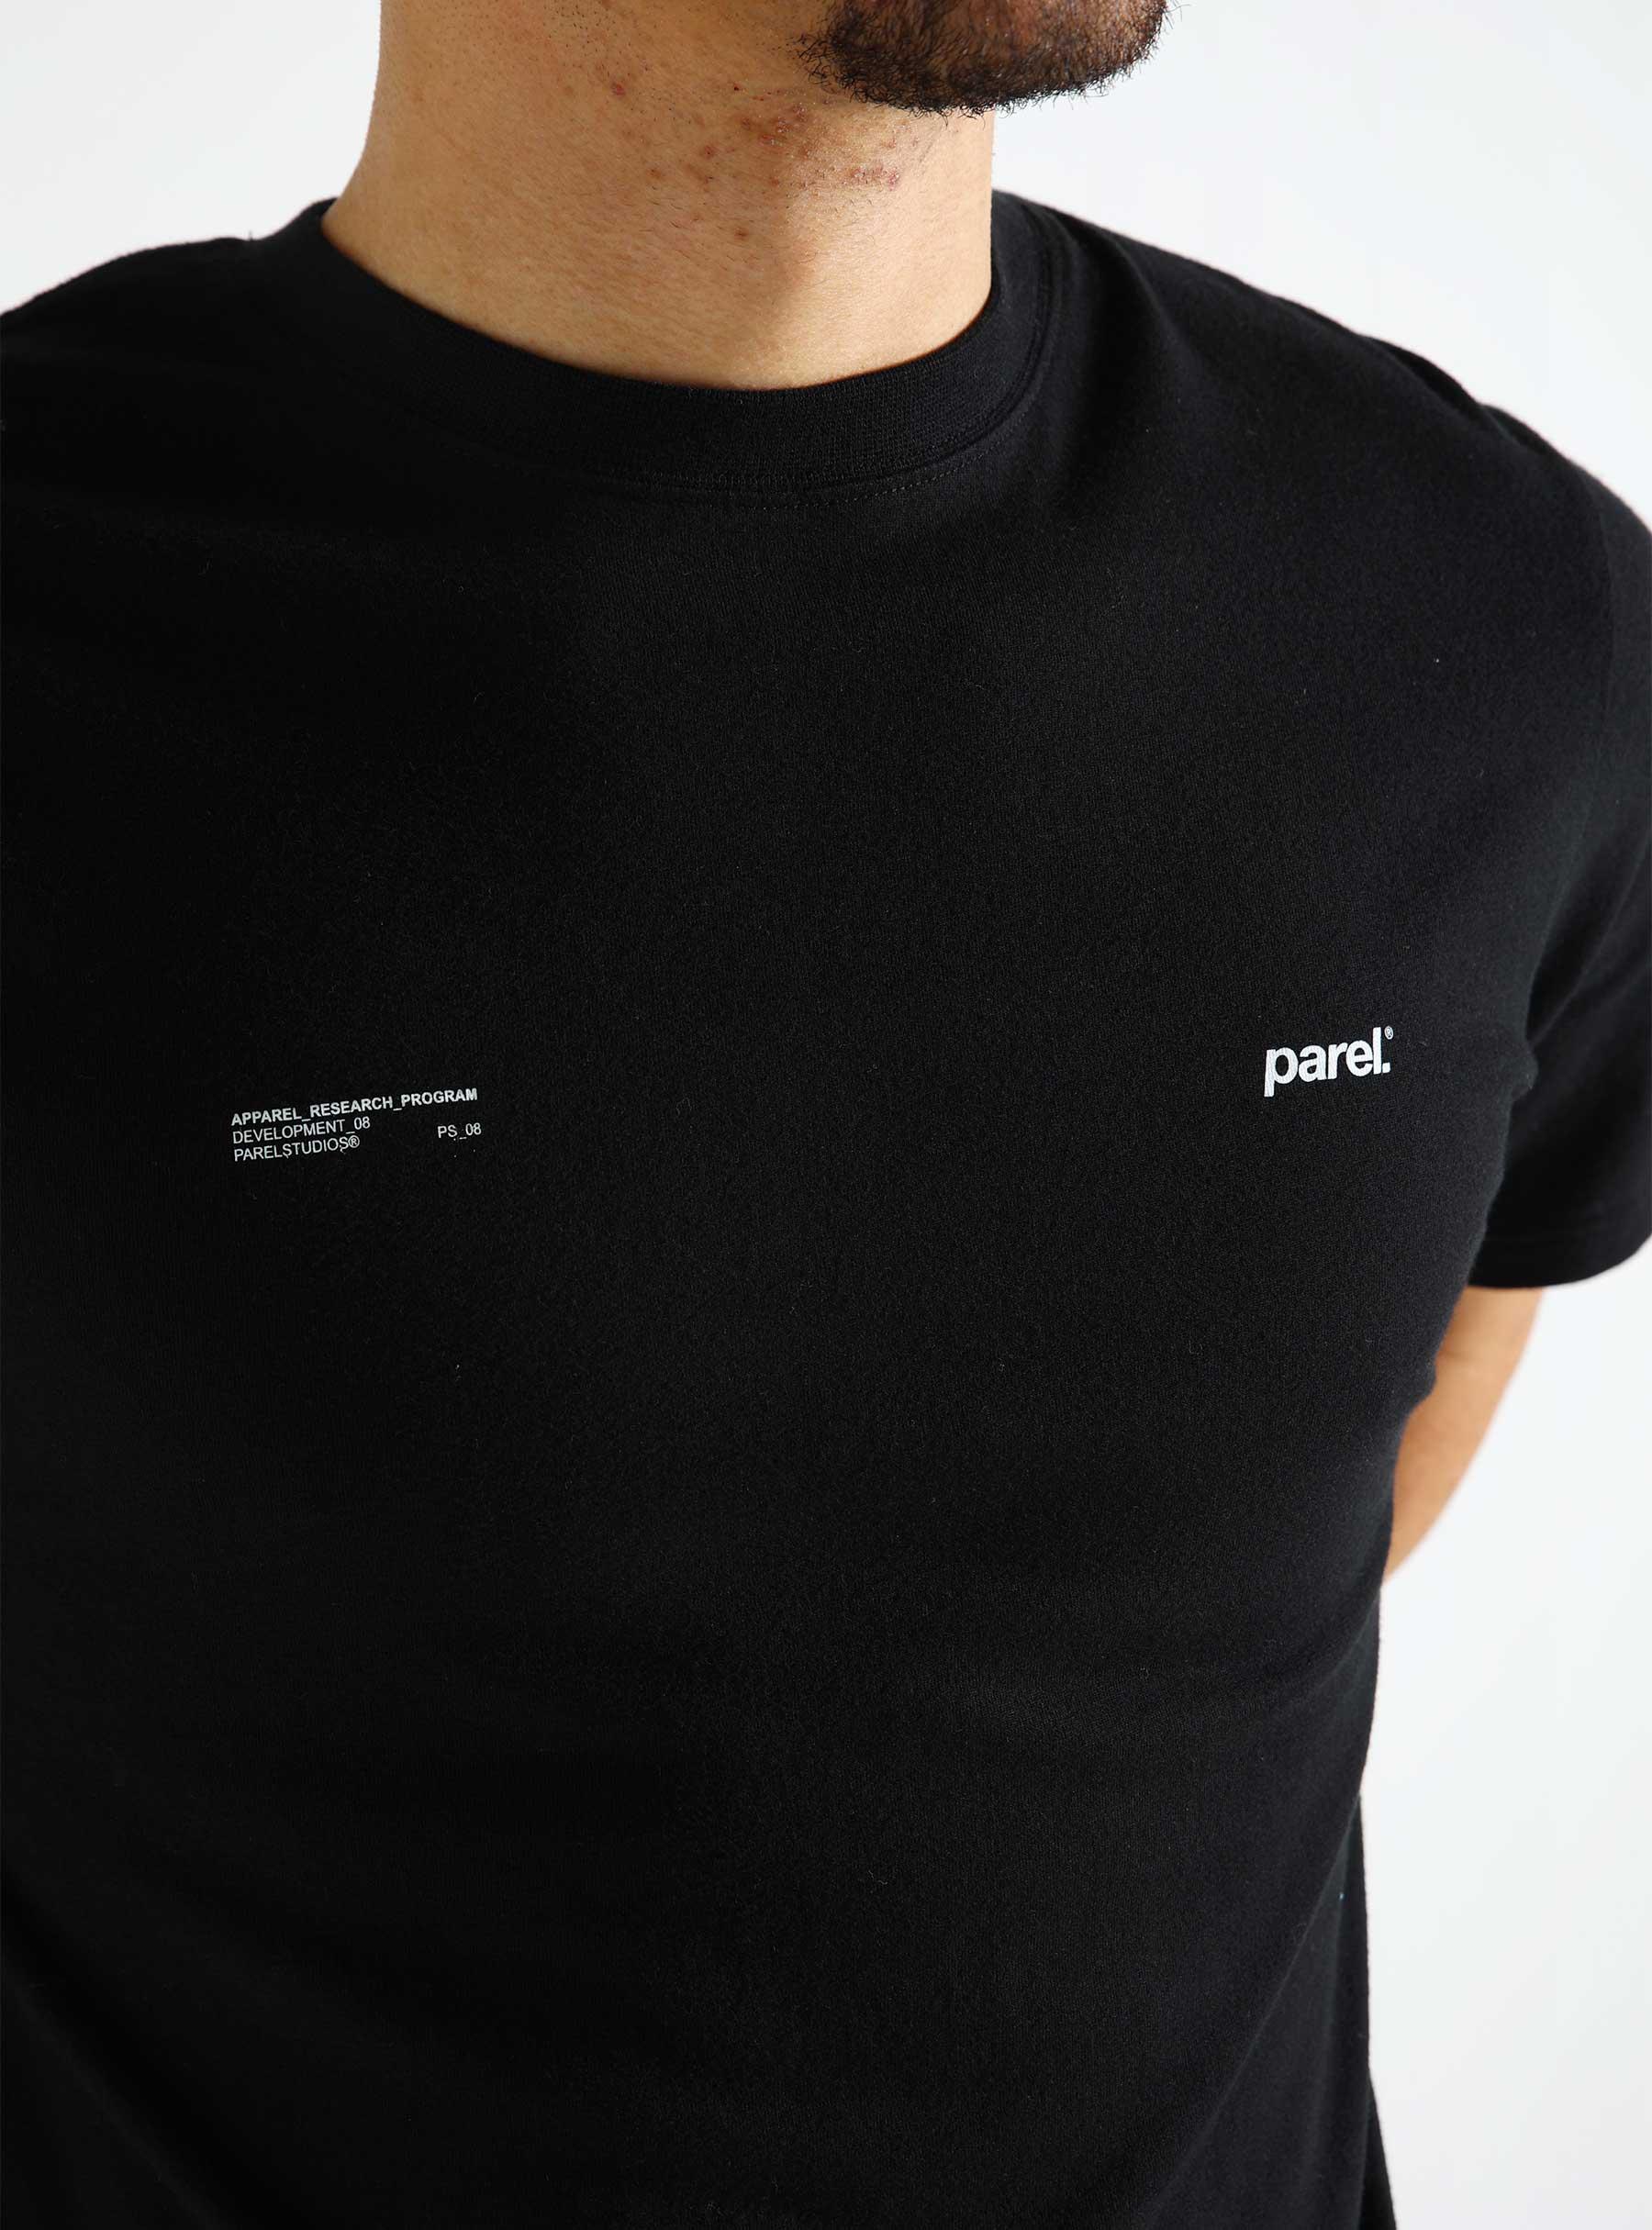 Classic BP T-Shirt Black parel_037